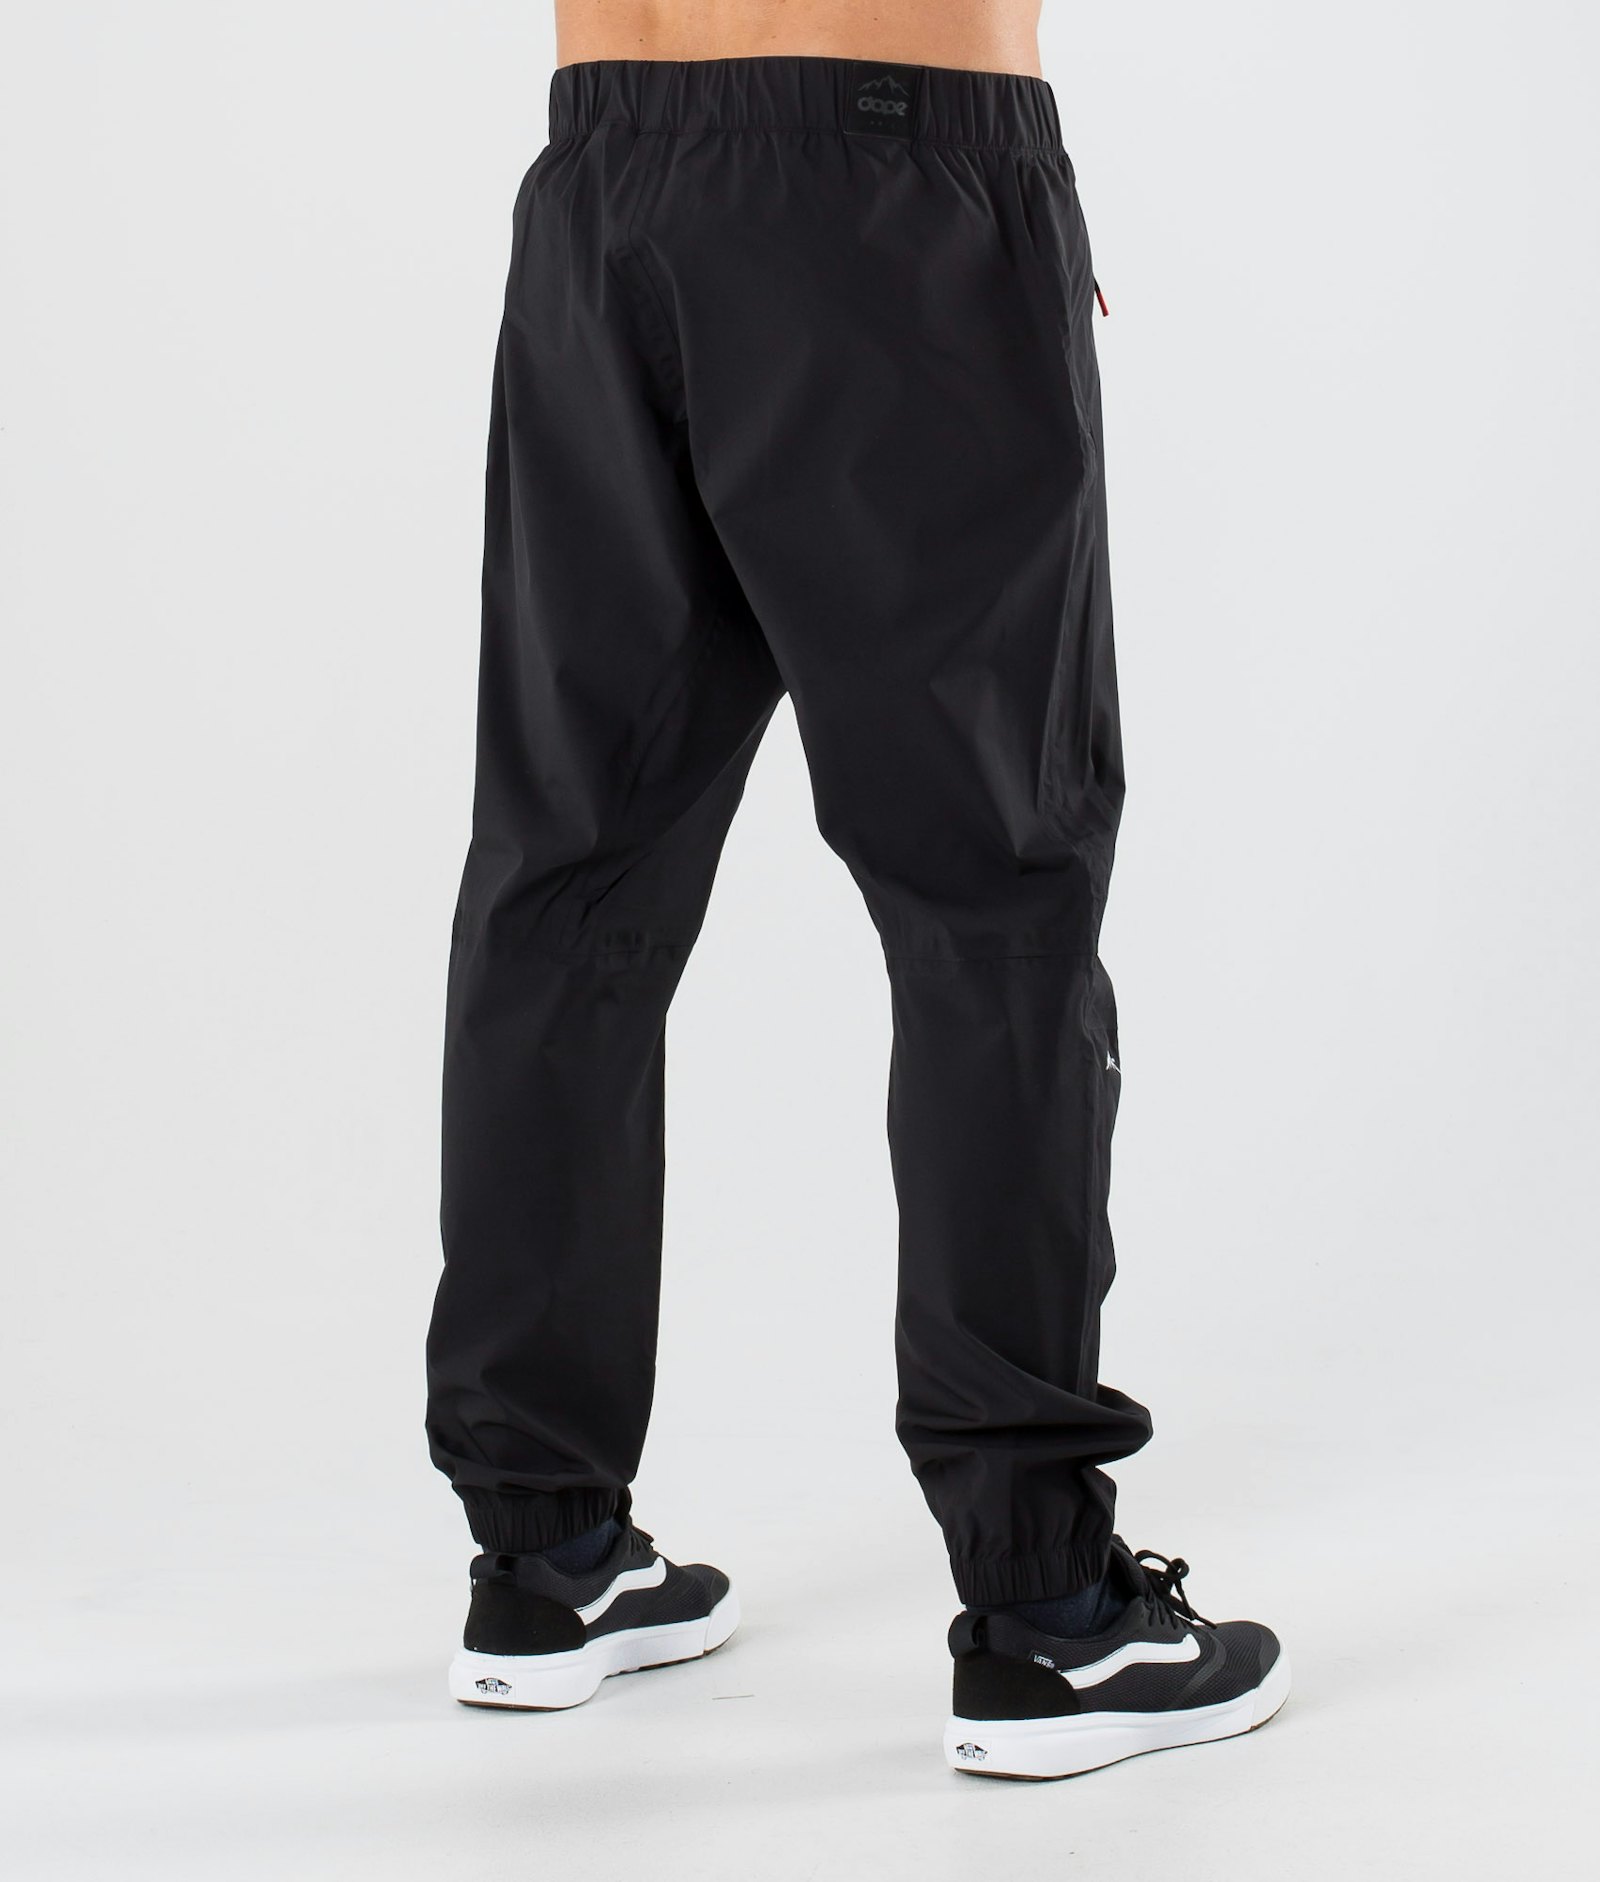 Dope Drizzard 2020 Pantalones Impermeables Hombre Black